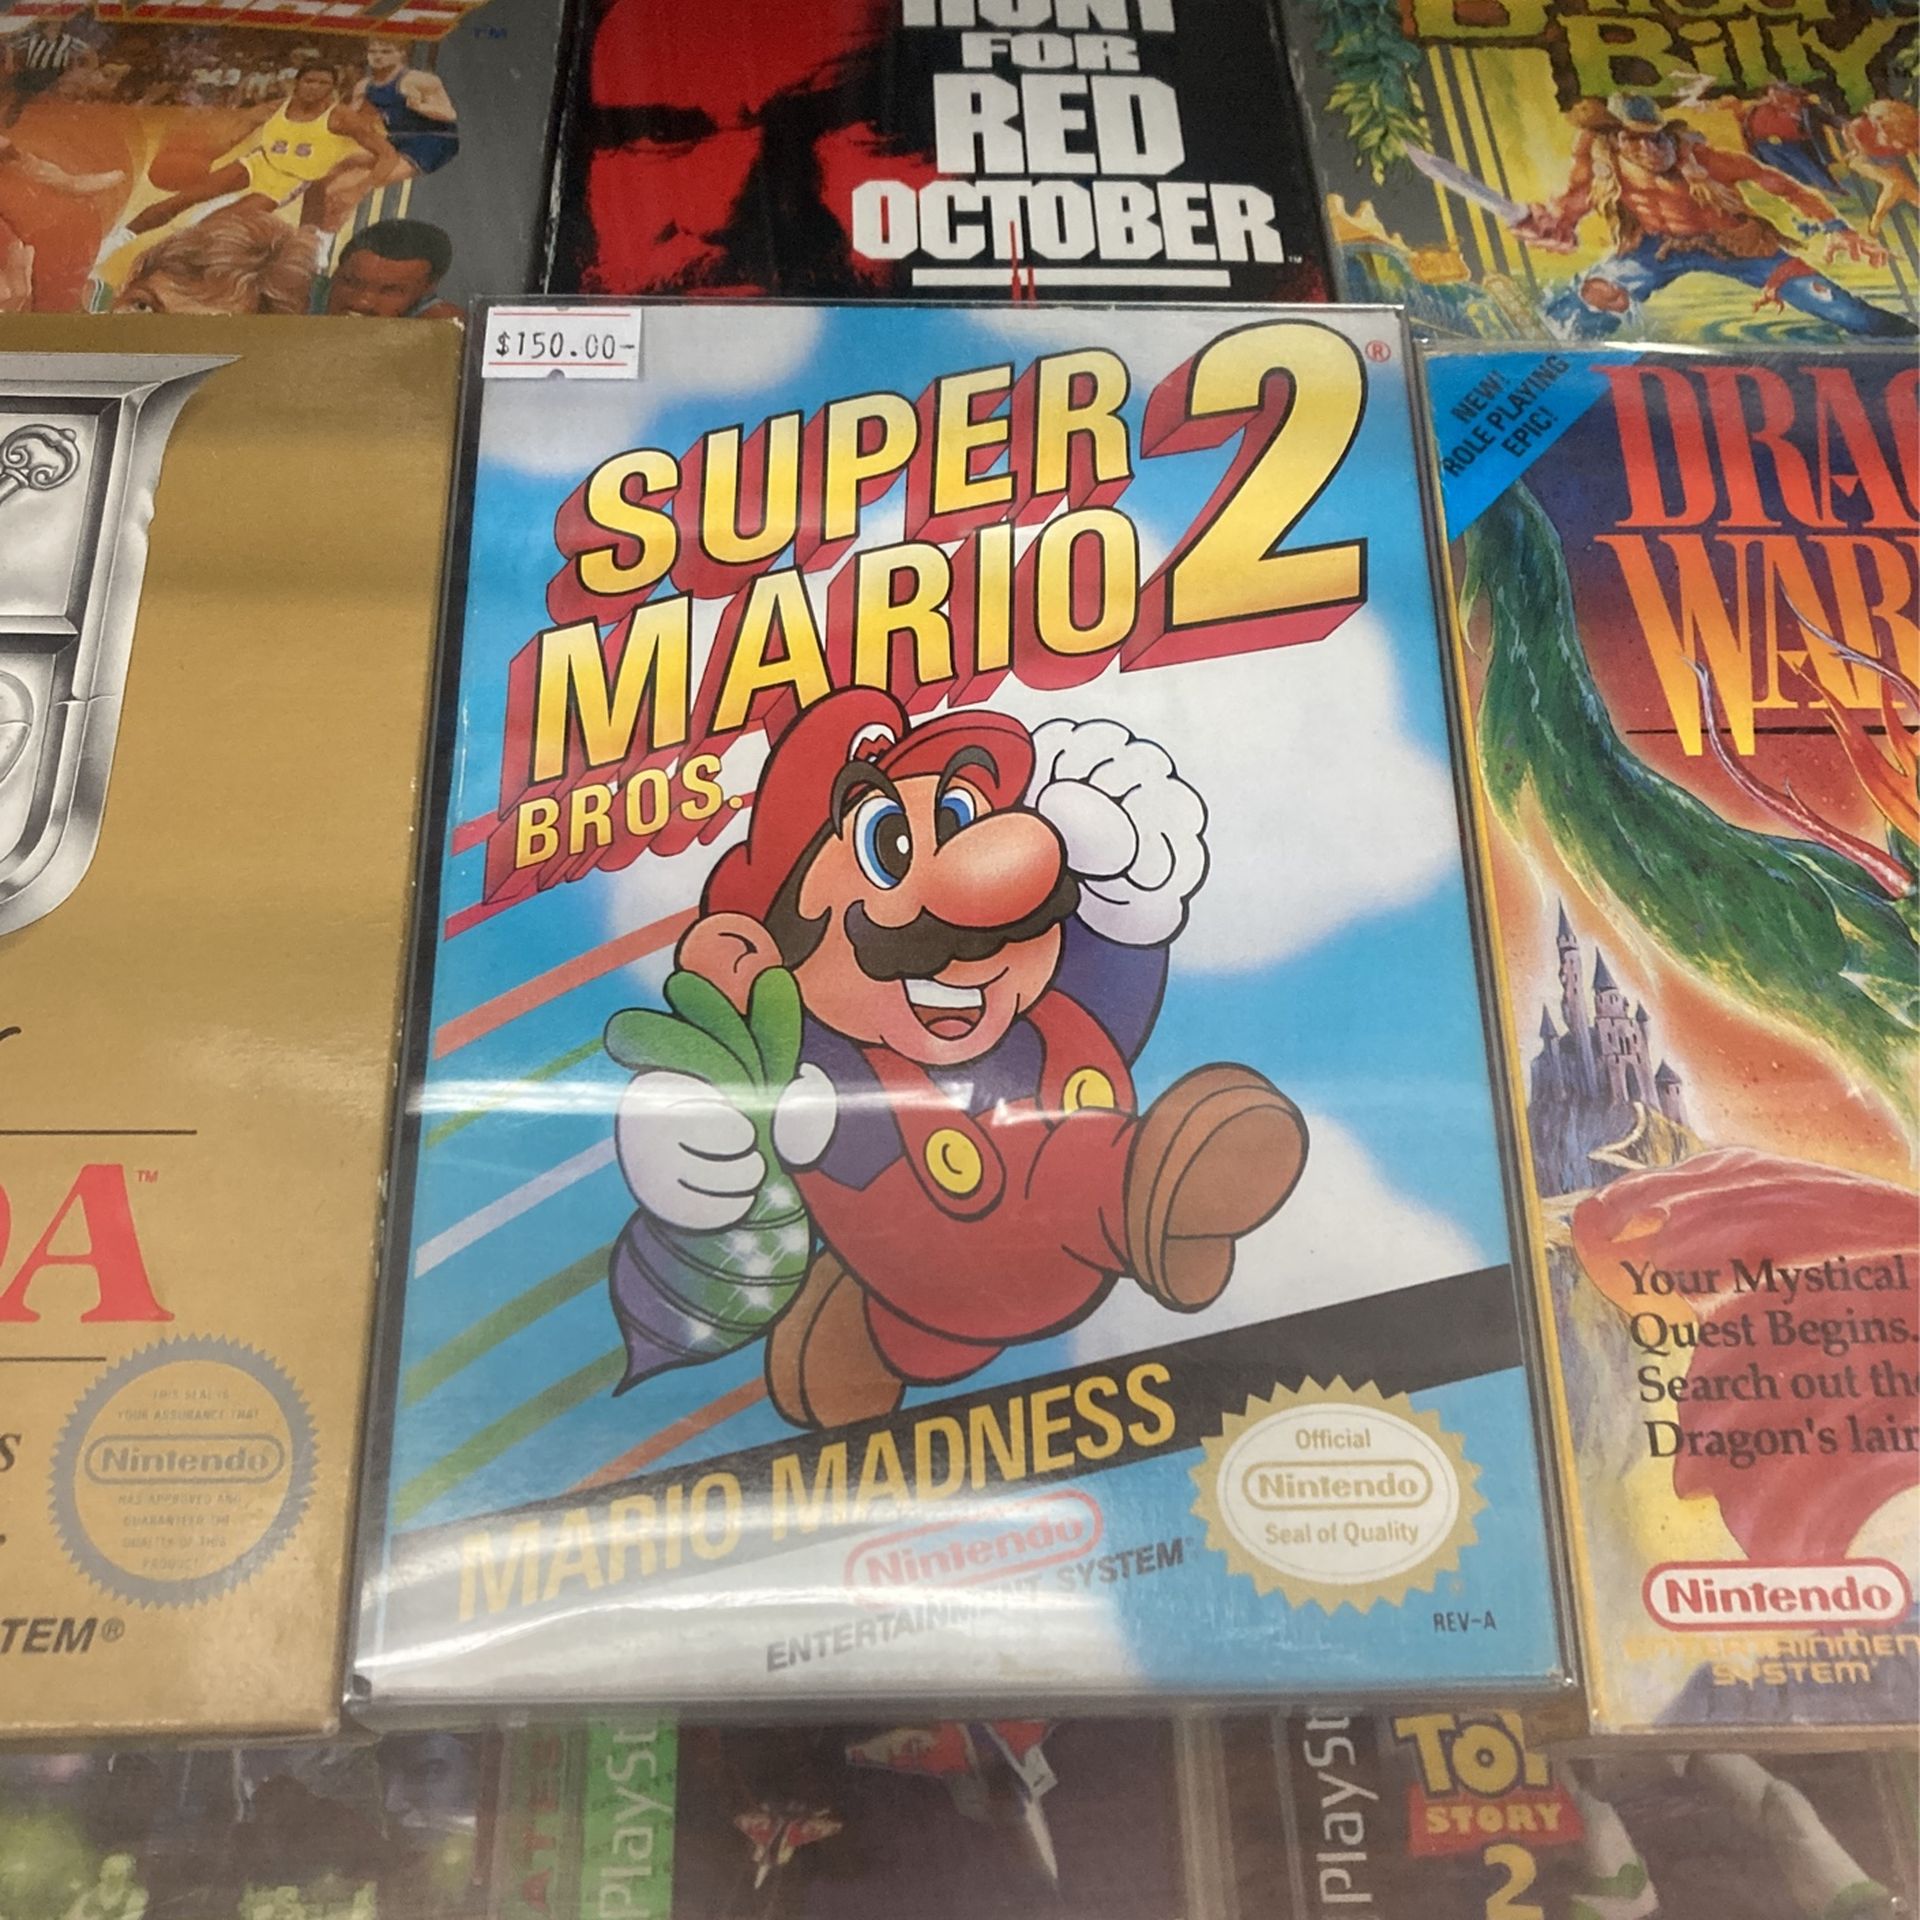 Inbox Super Mario Bros 2 Mario Madness Nintendo Entertainment System Game